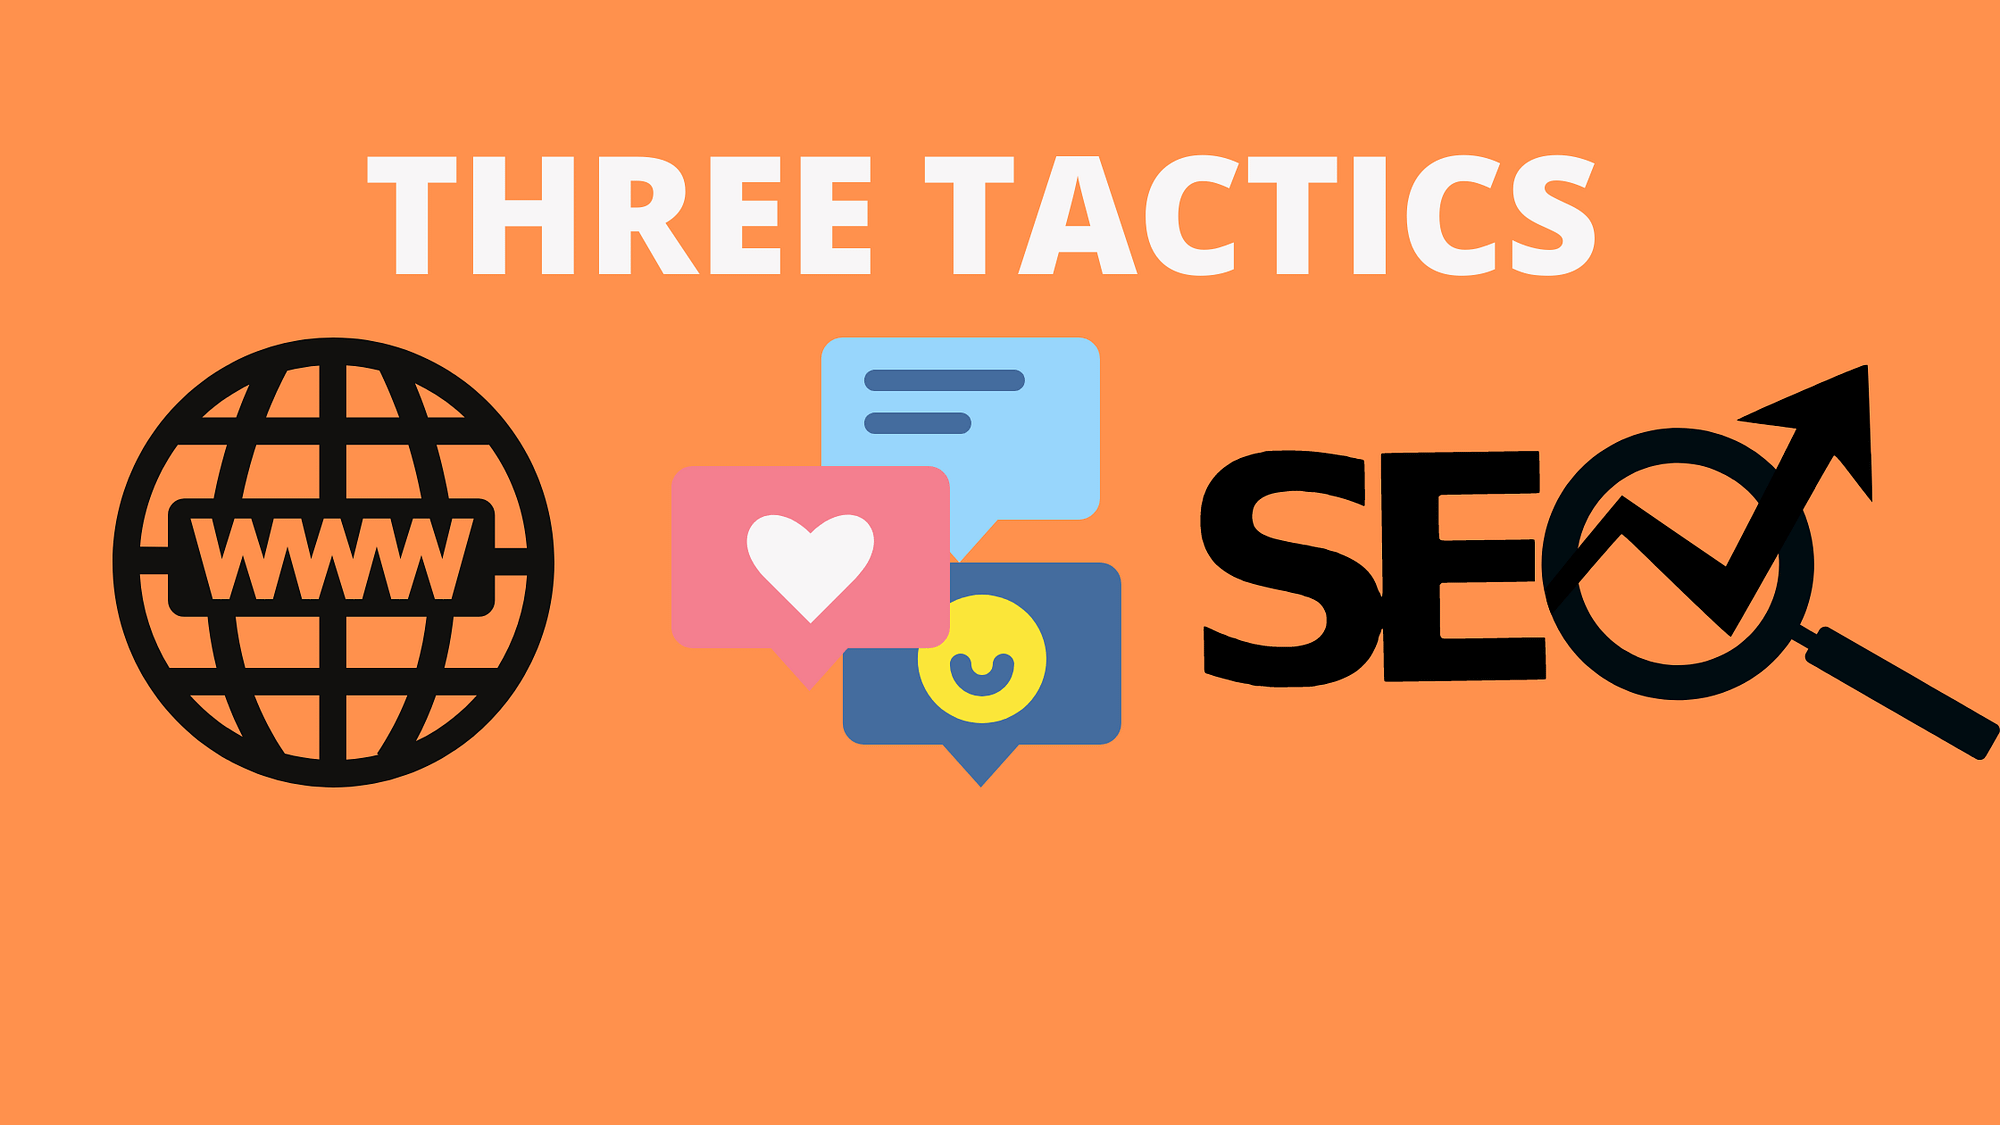 Introducing the Three Tactics